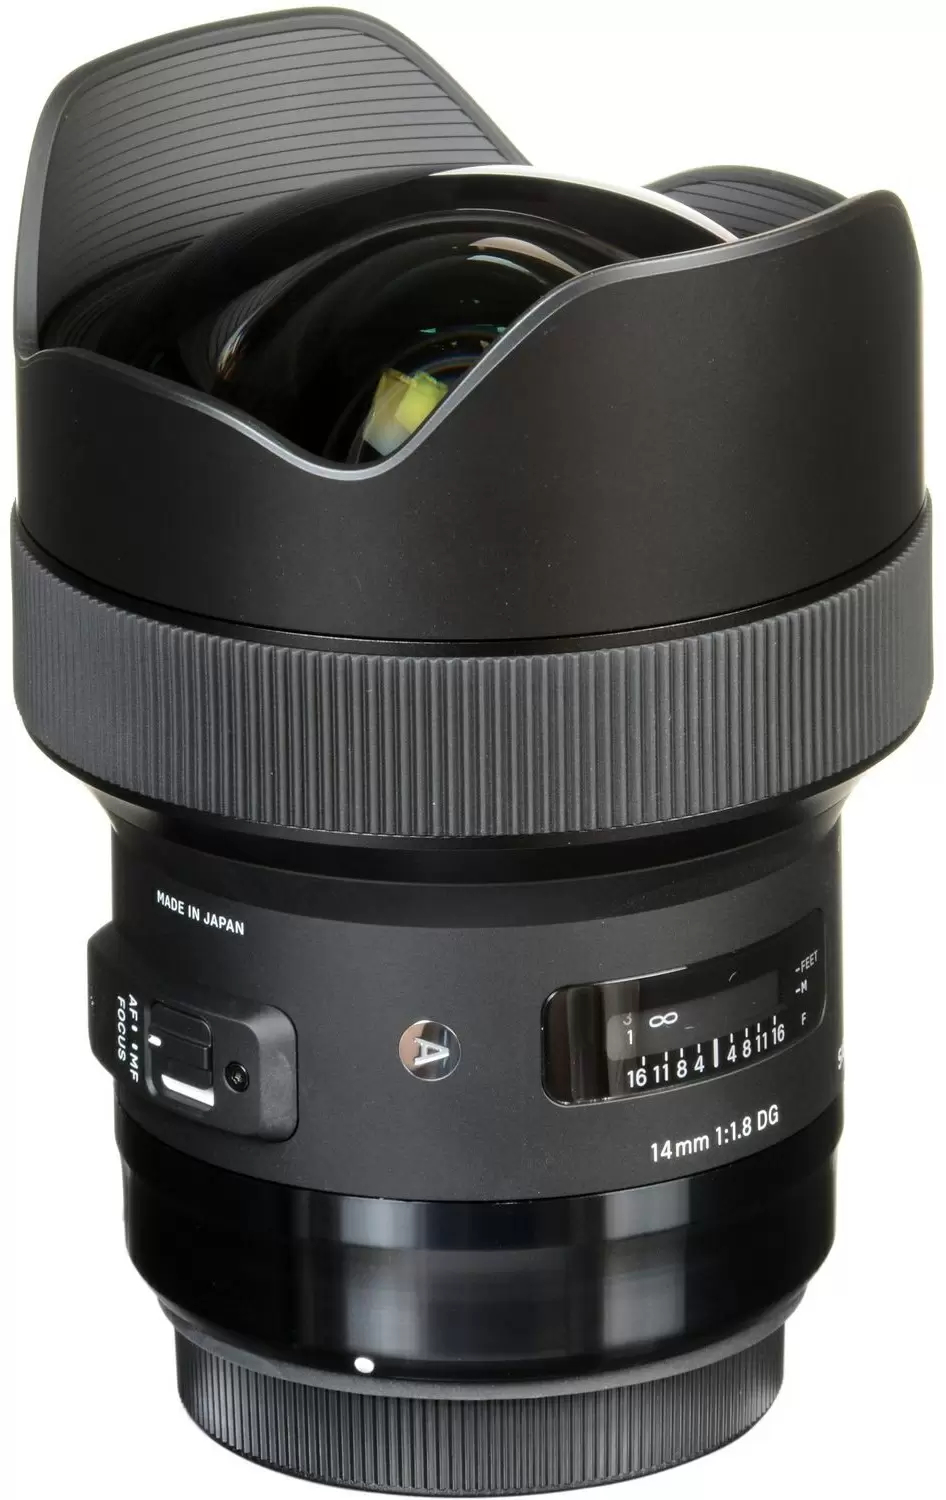 Obiectiv Sigma AF 14mm f/1.8 DG HSM Art pentru Canon, negru